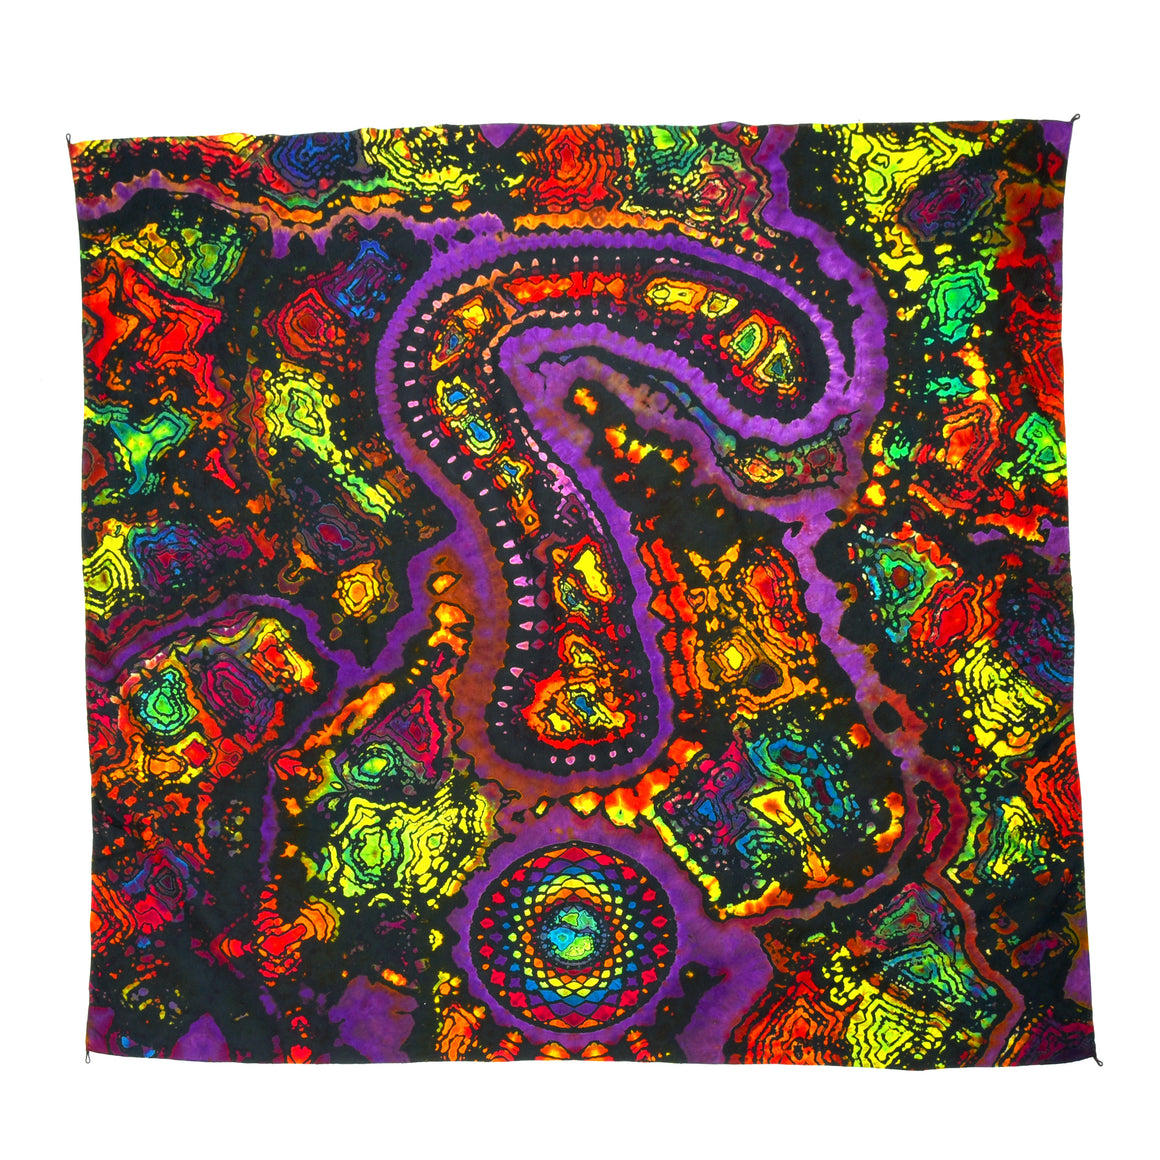 43" x 43" Tie Dye Tapestry w/ Tie Loops - Question Mark w/ Rainbow Mandala & Geodes